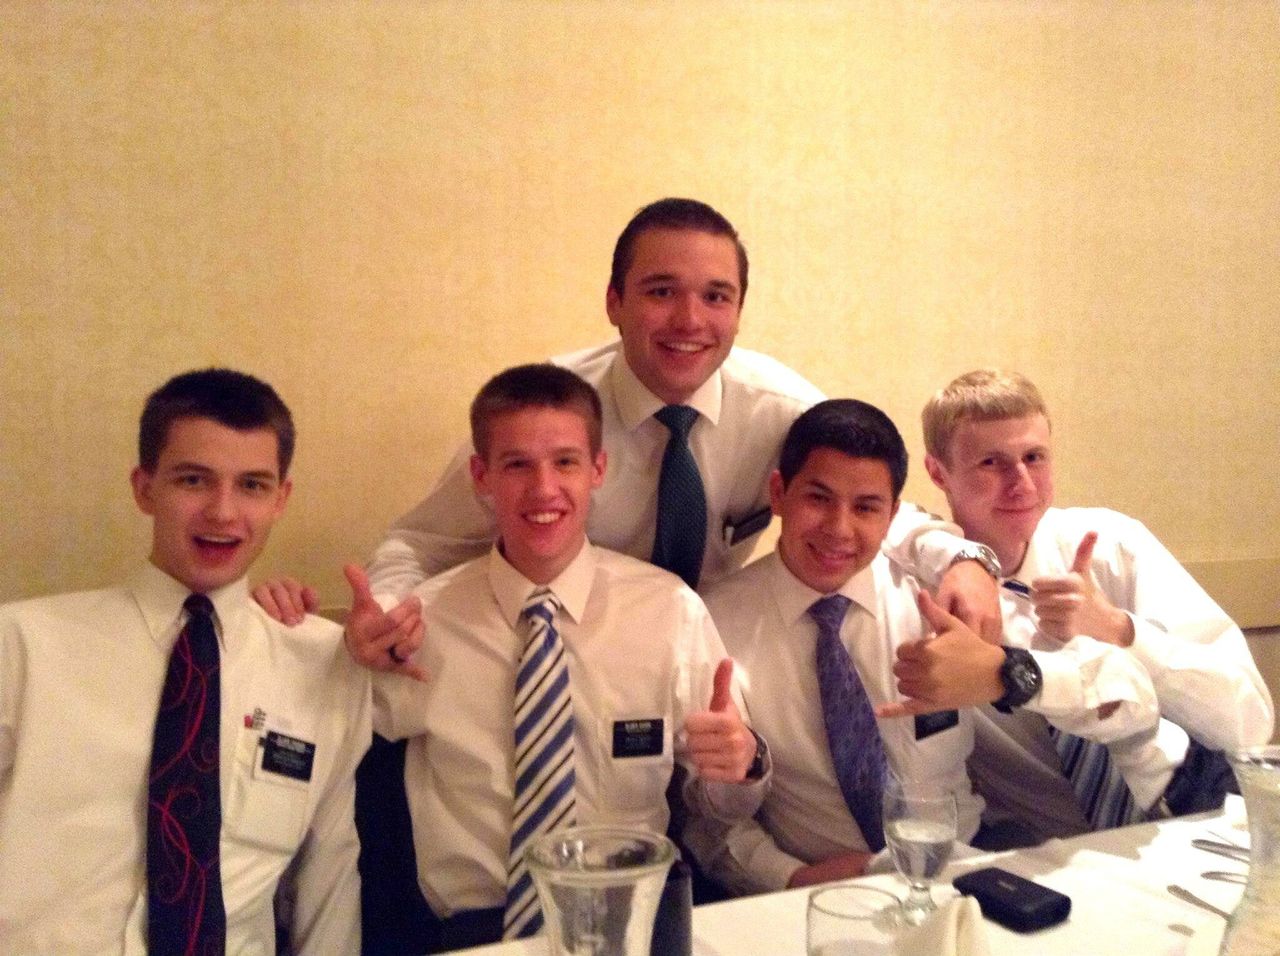 <div class="feature-caption"><em>Ryan Tucker, left, with his fellow missionaries.</em></div>